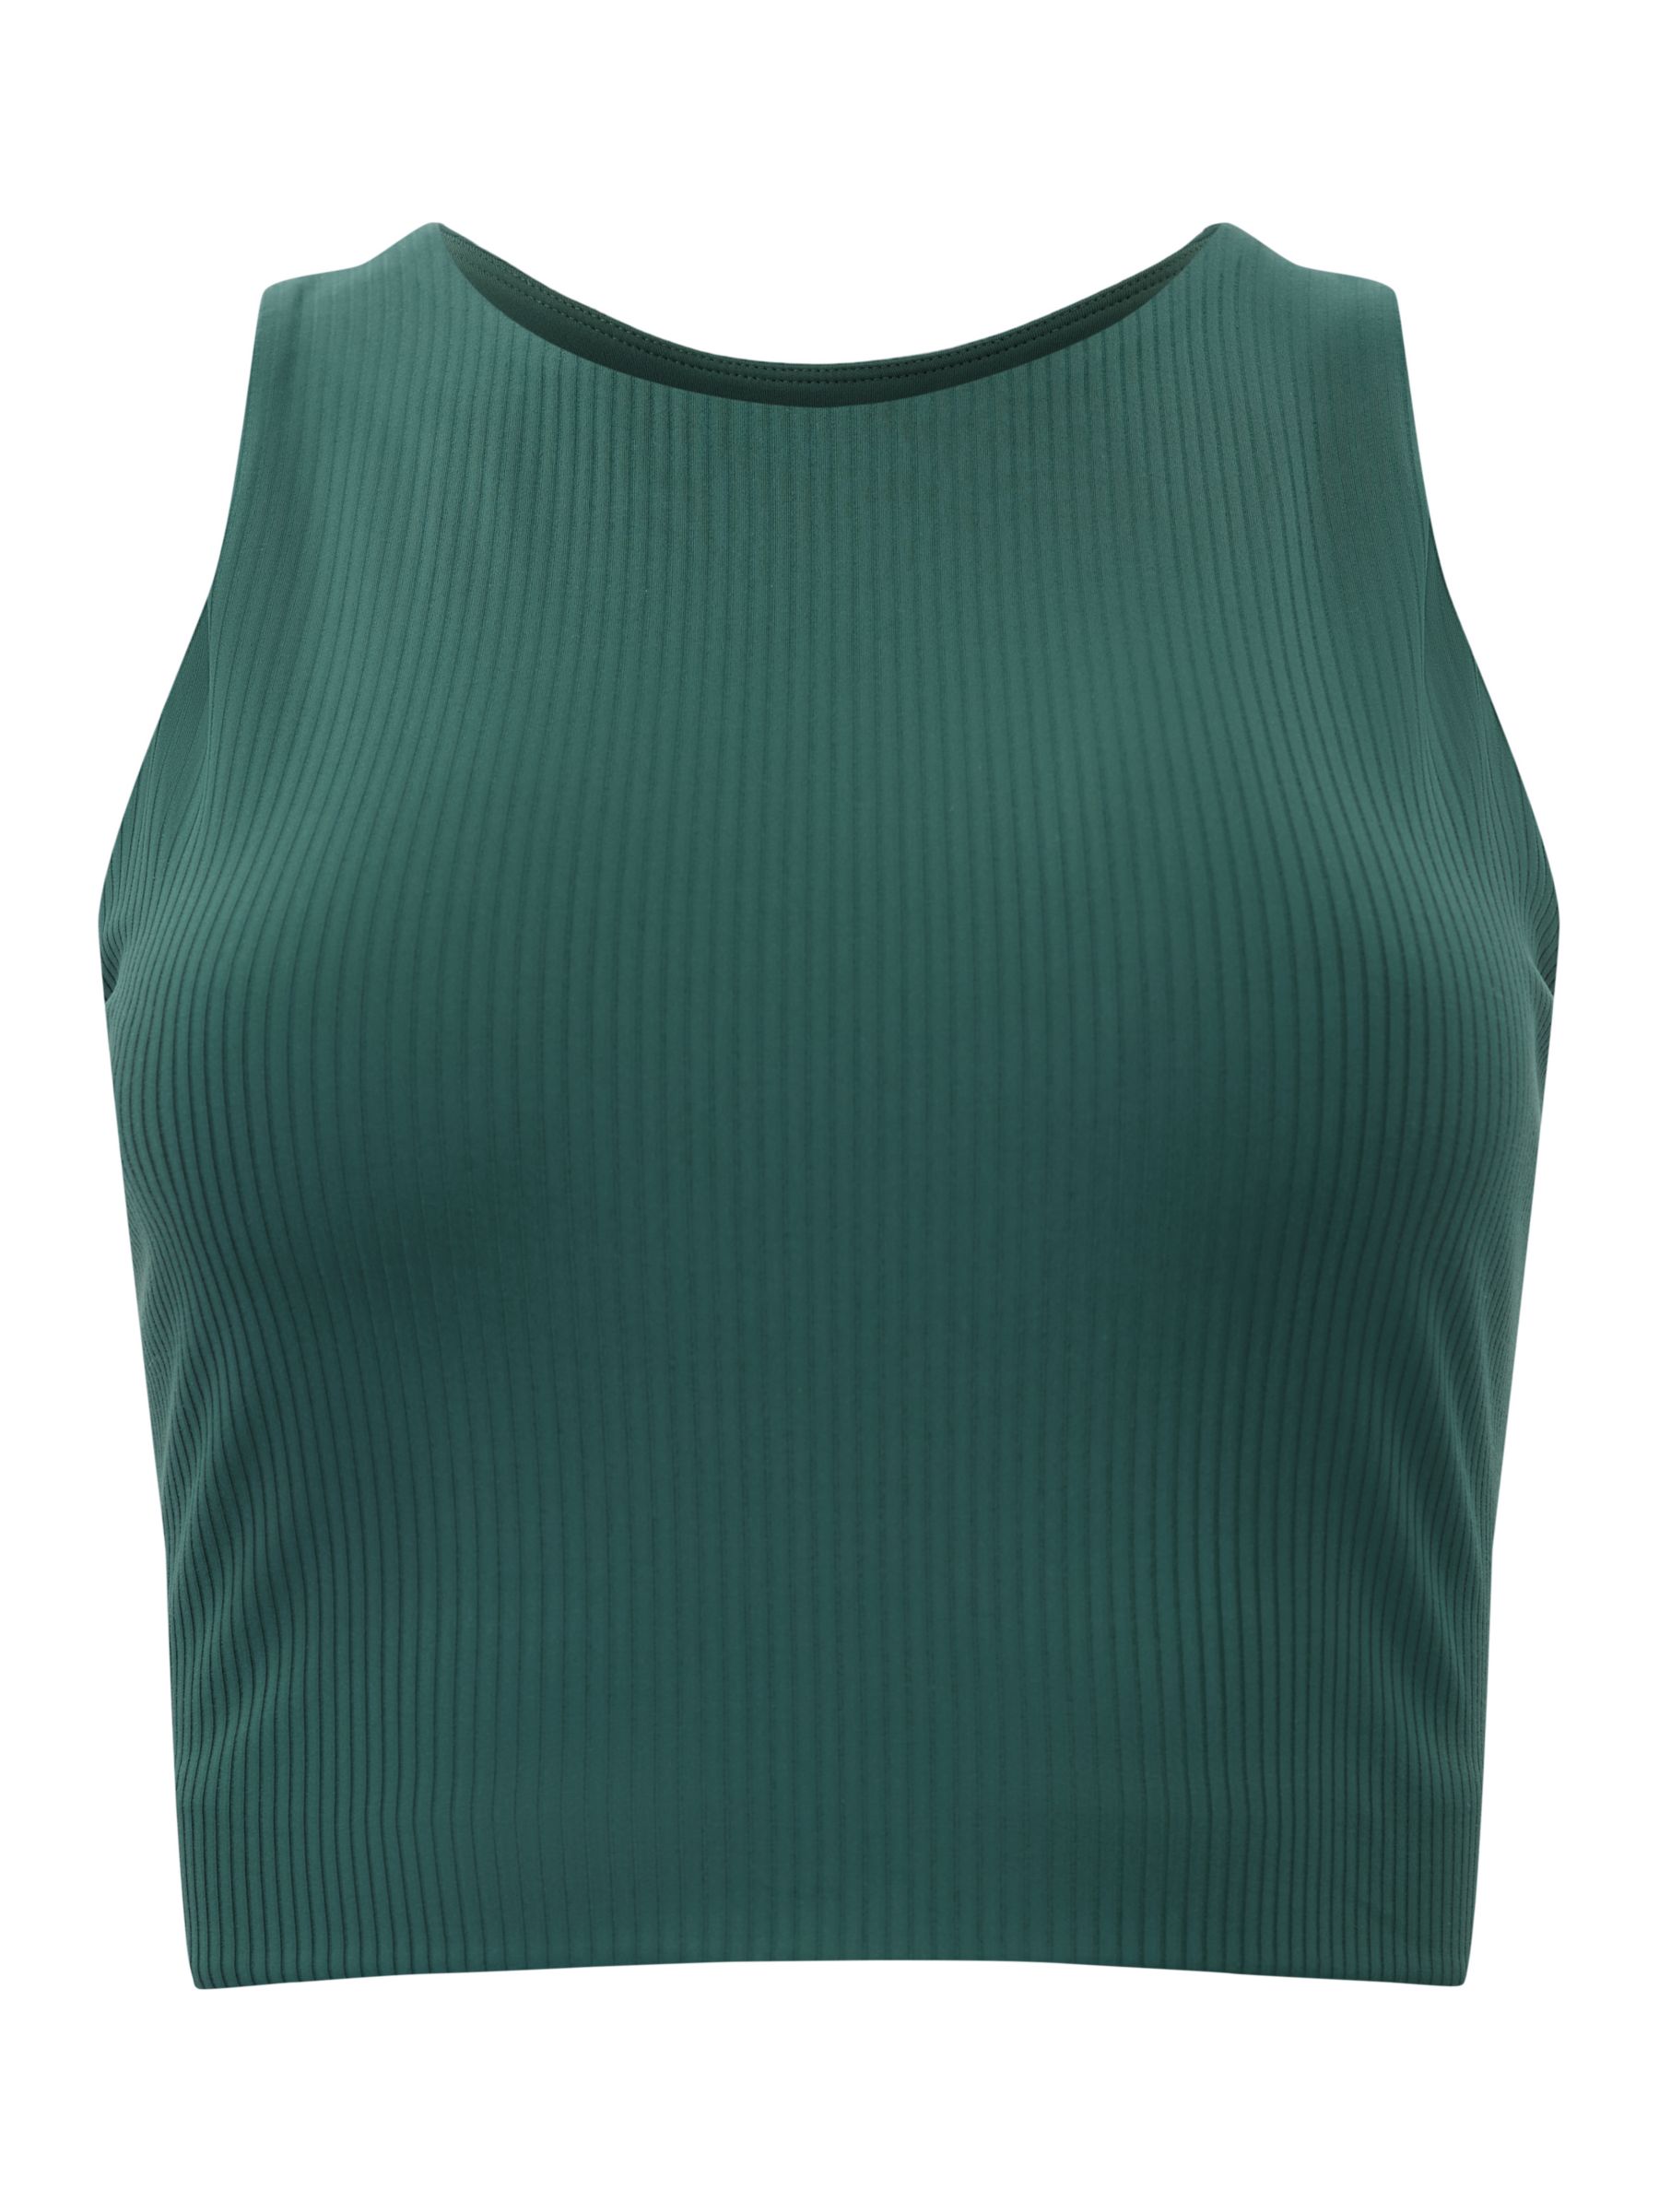 Girlfriend Collective TOMMY SQUARE NECK - Medium support sports bra -  moss/dark green 